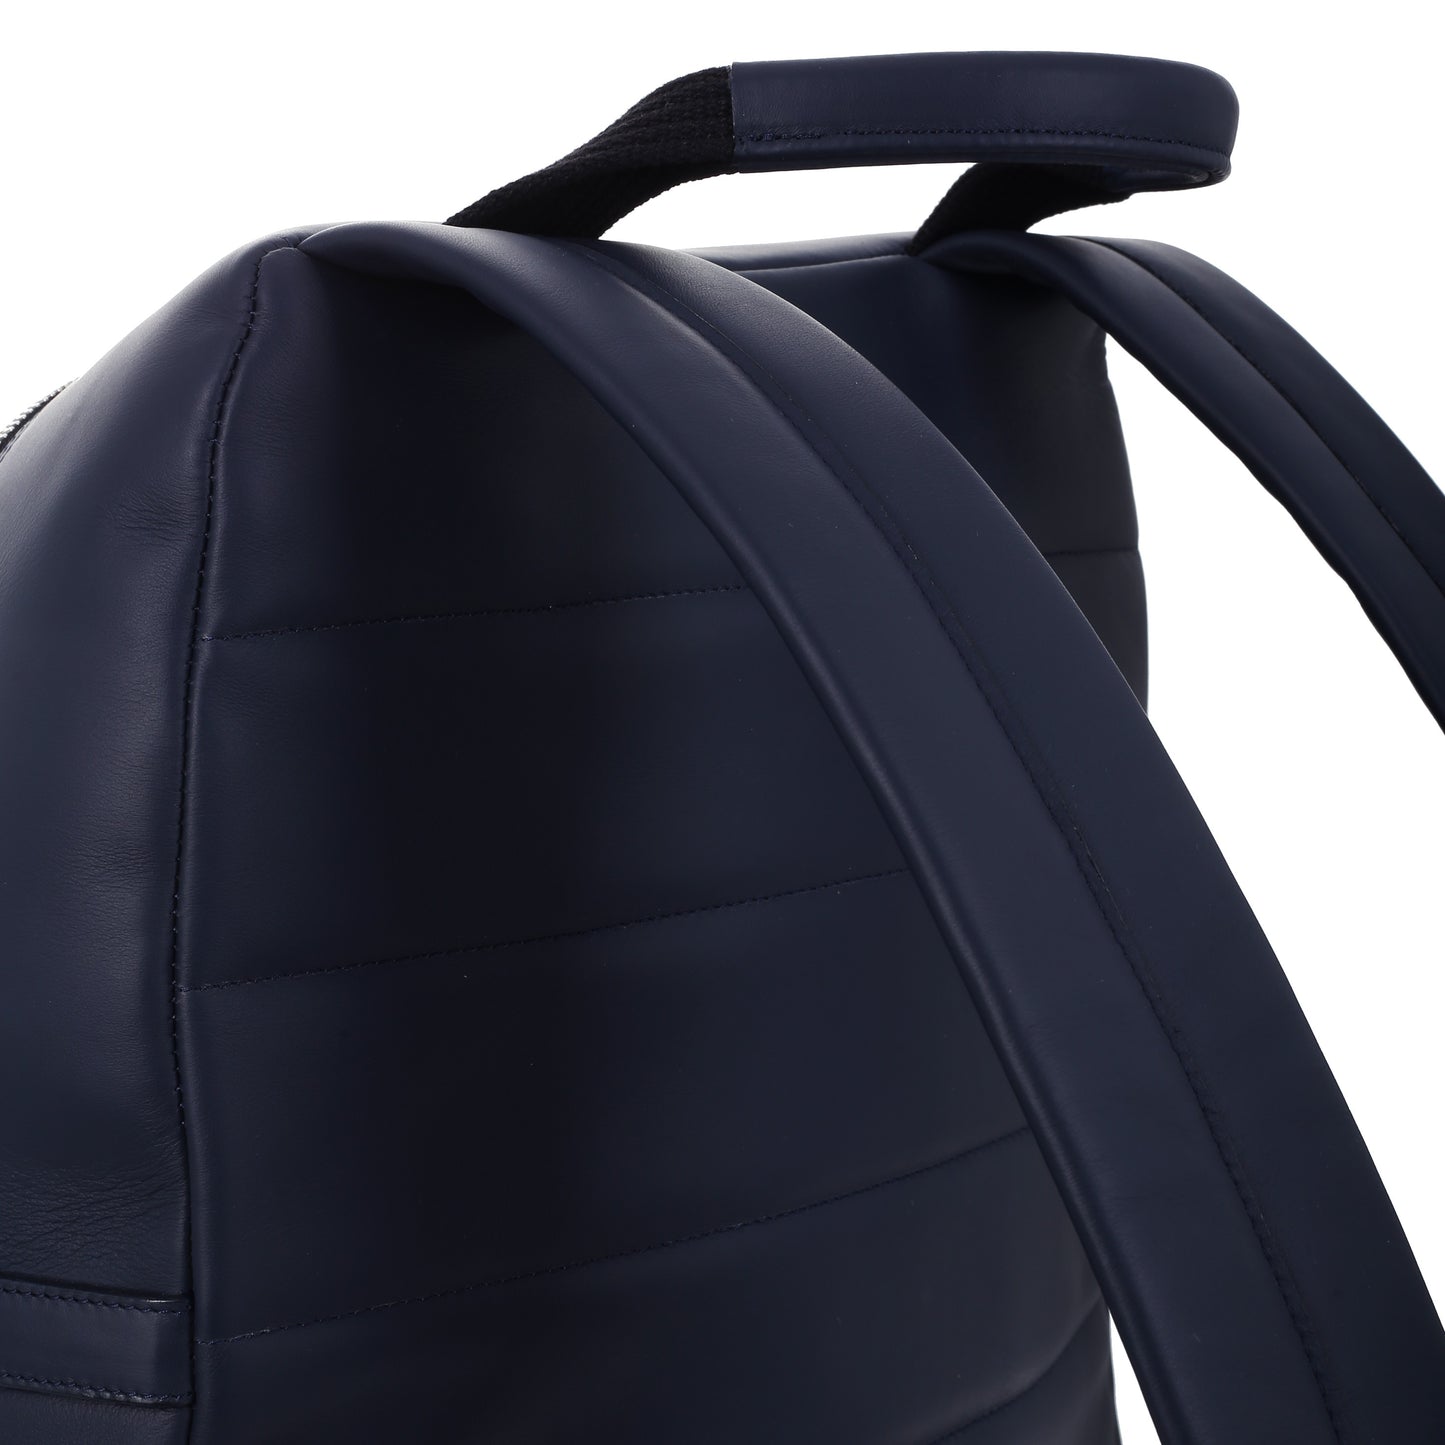 NAVY leather men's backpack